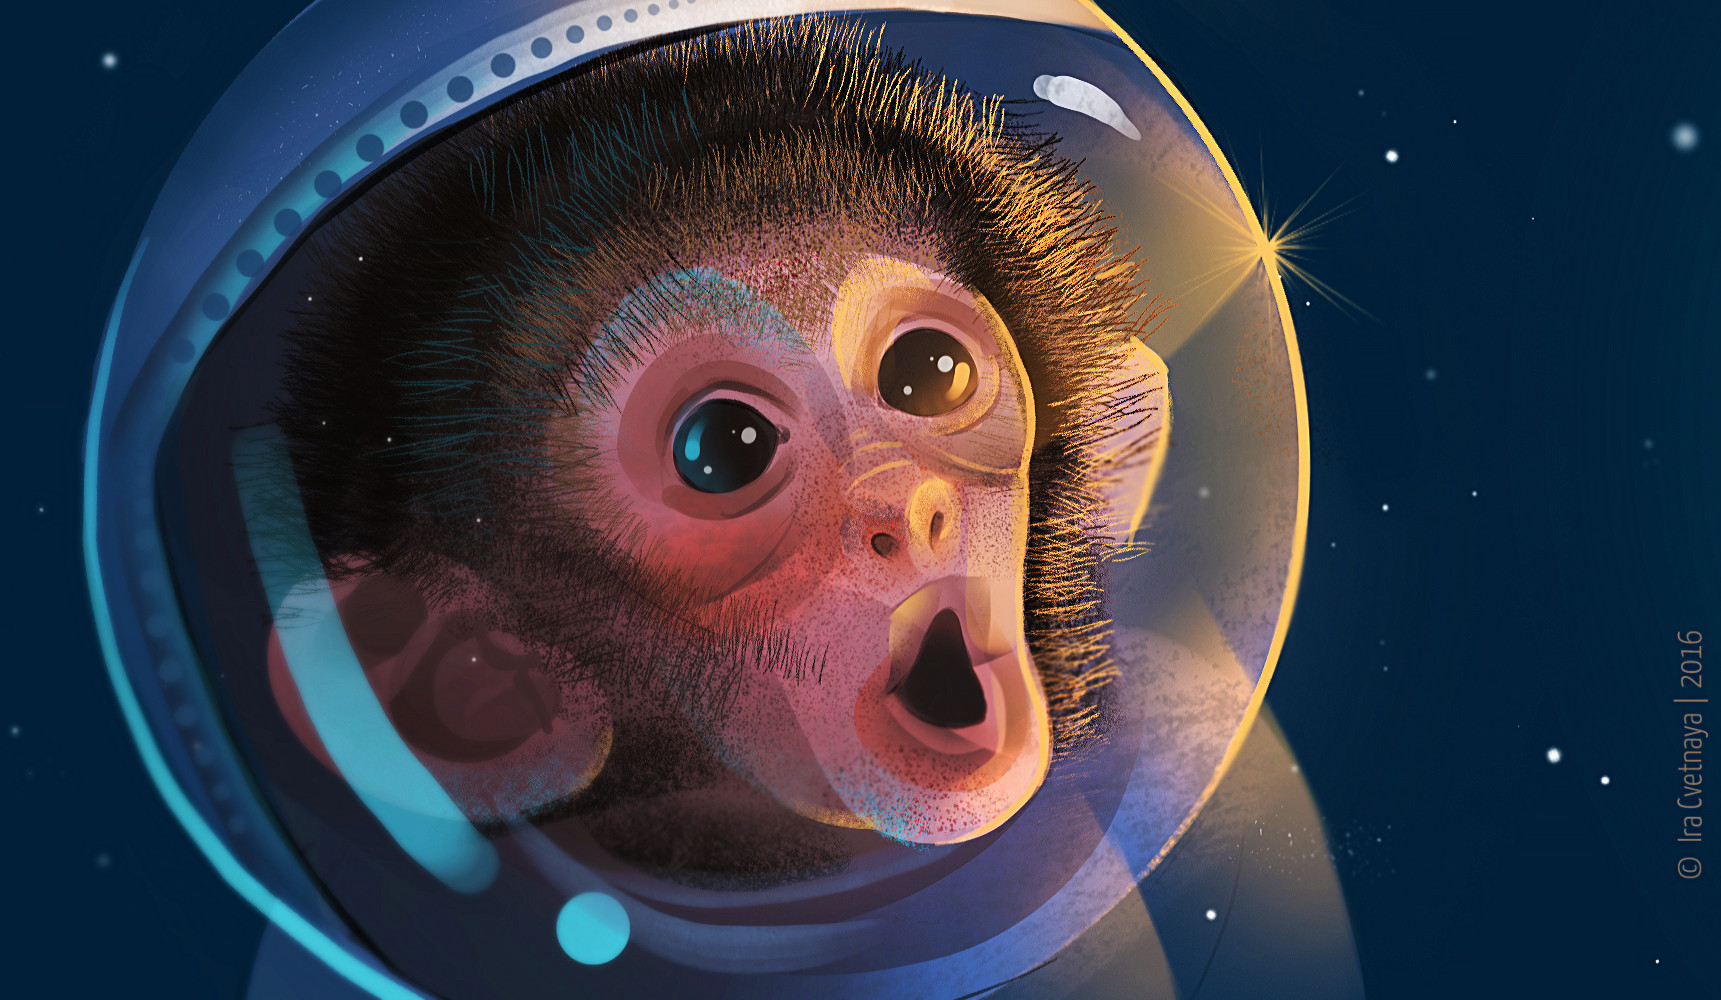 ArtStation - Space monkey